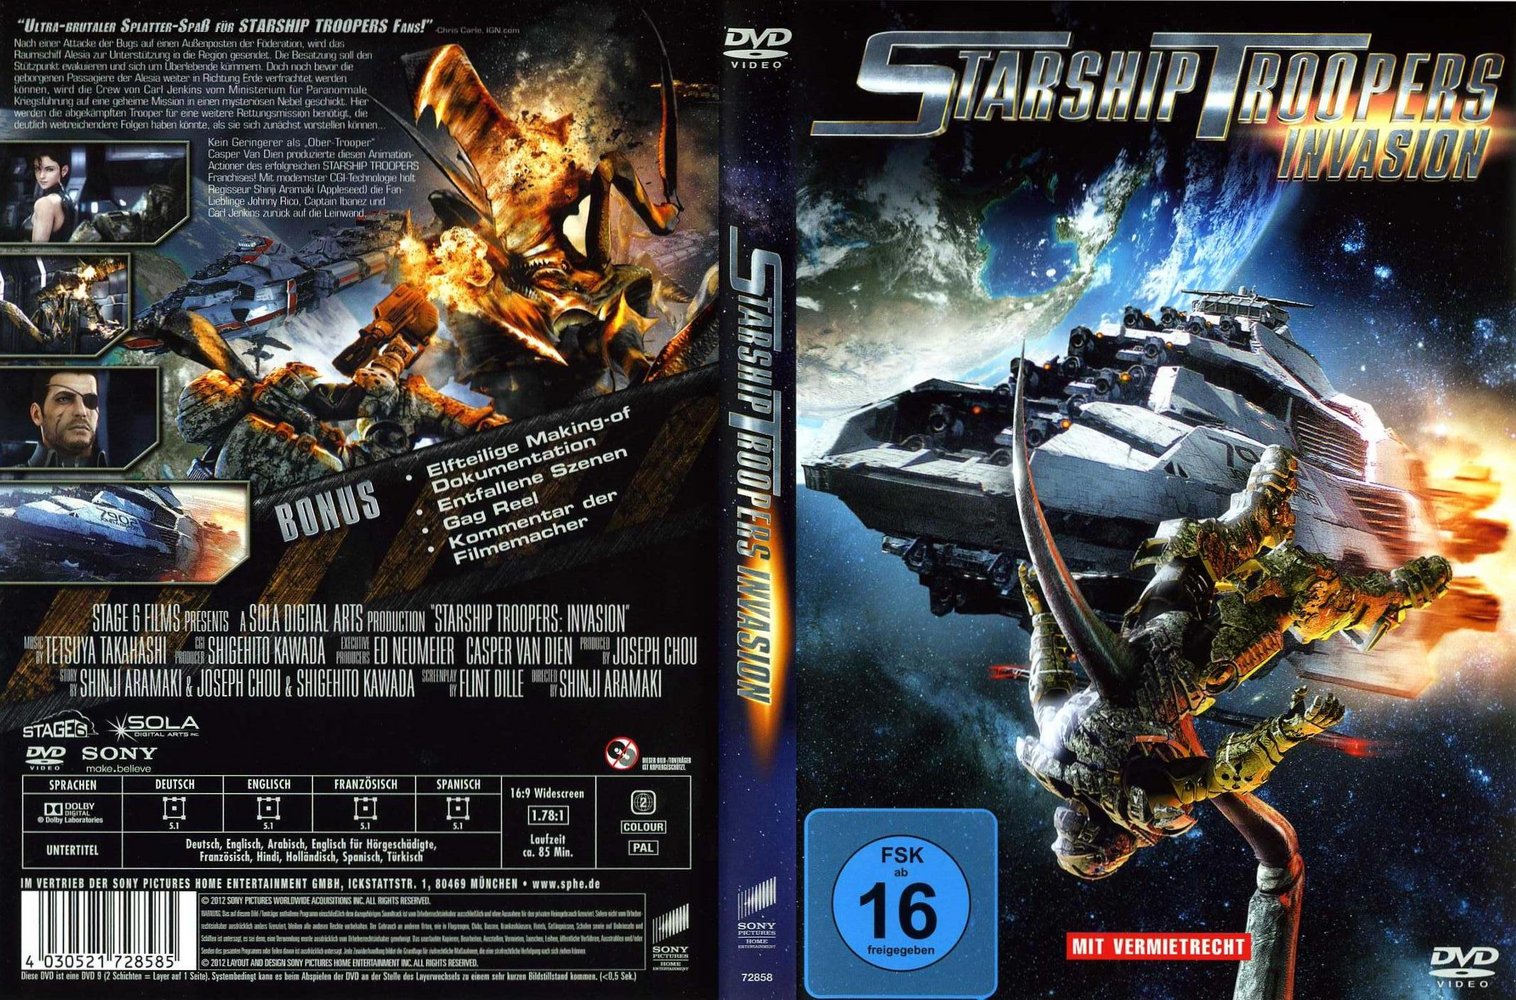 Starship Troopers Blu-ray Invasion 